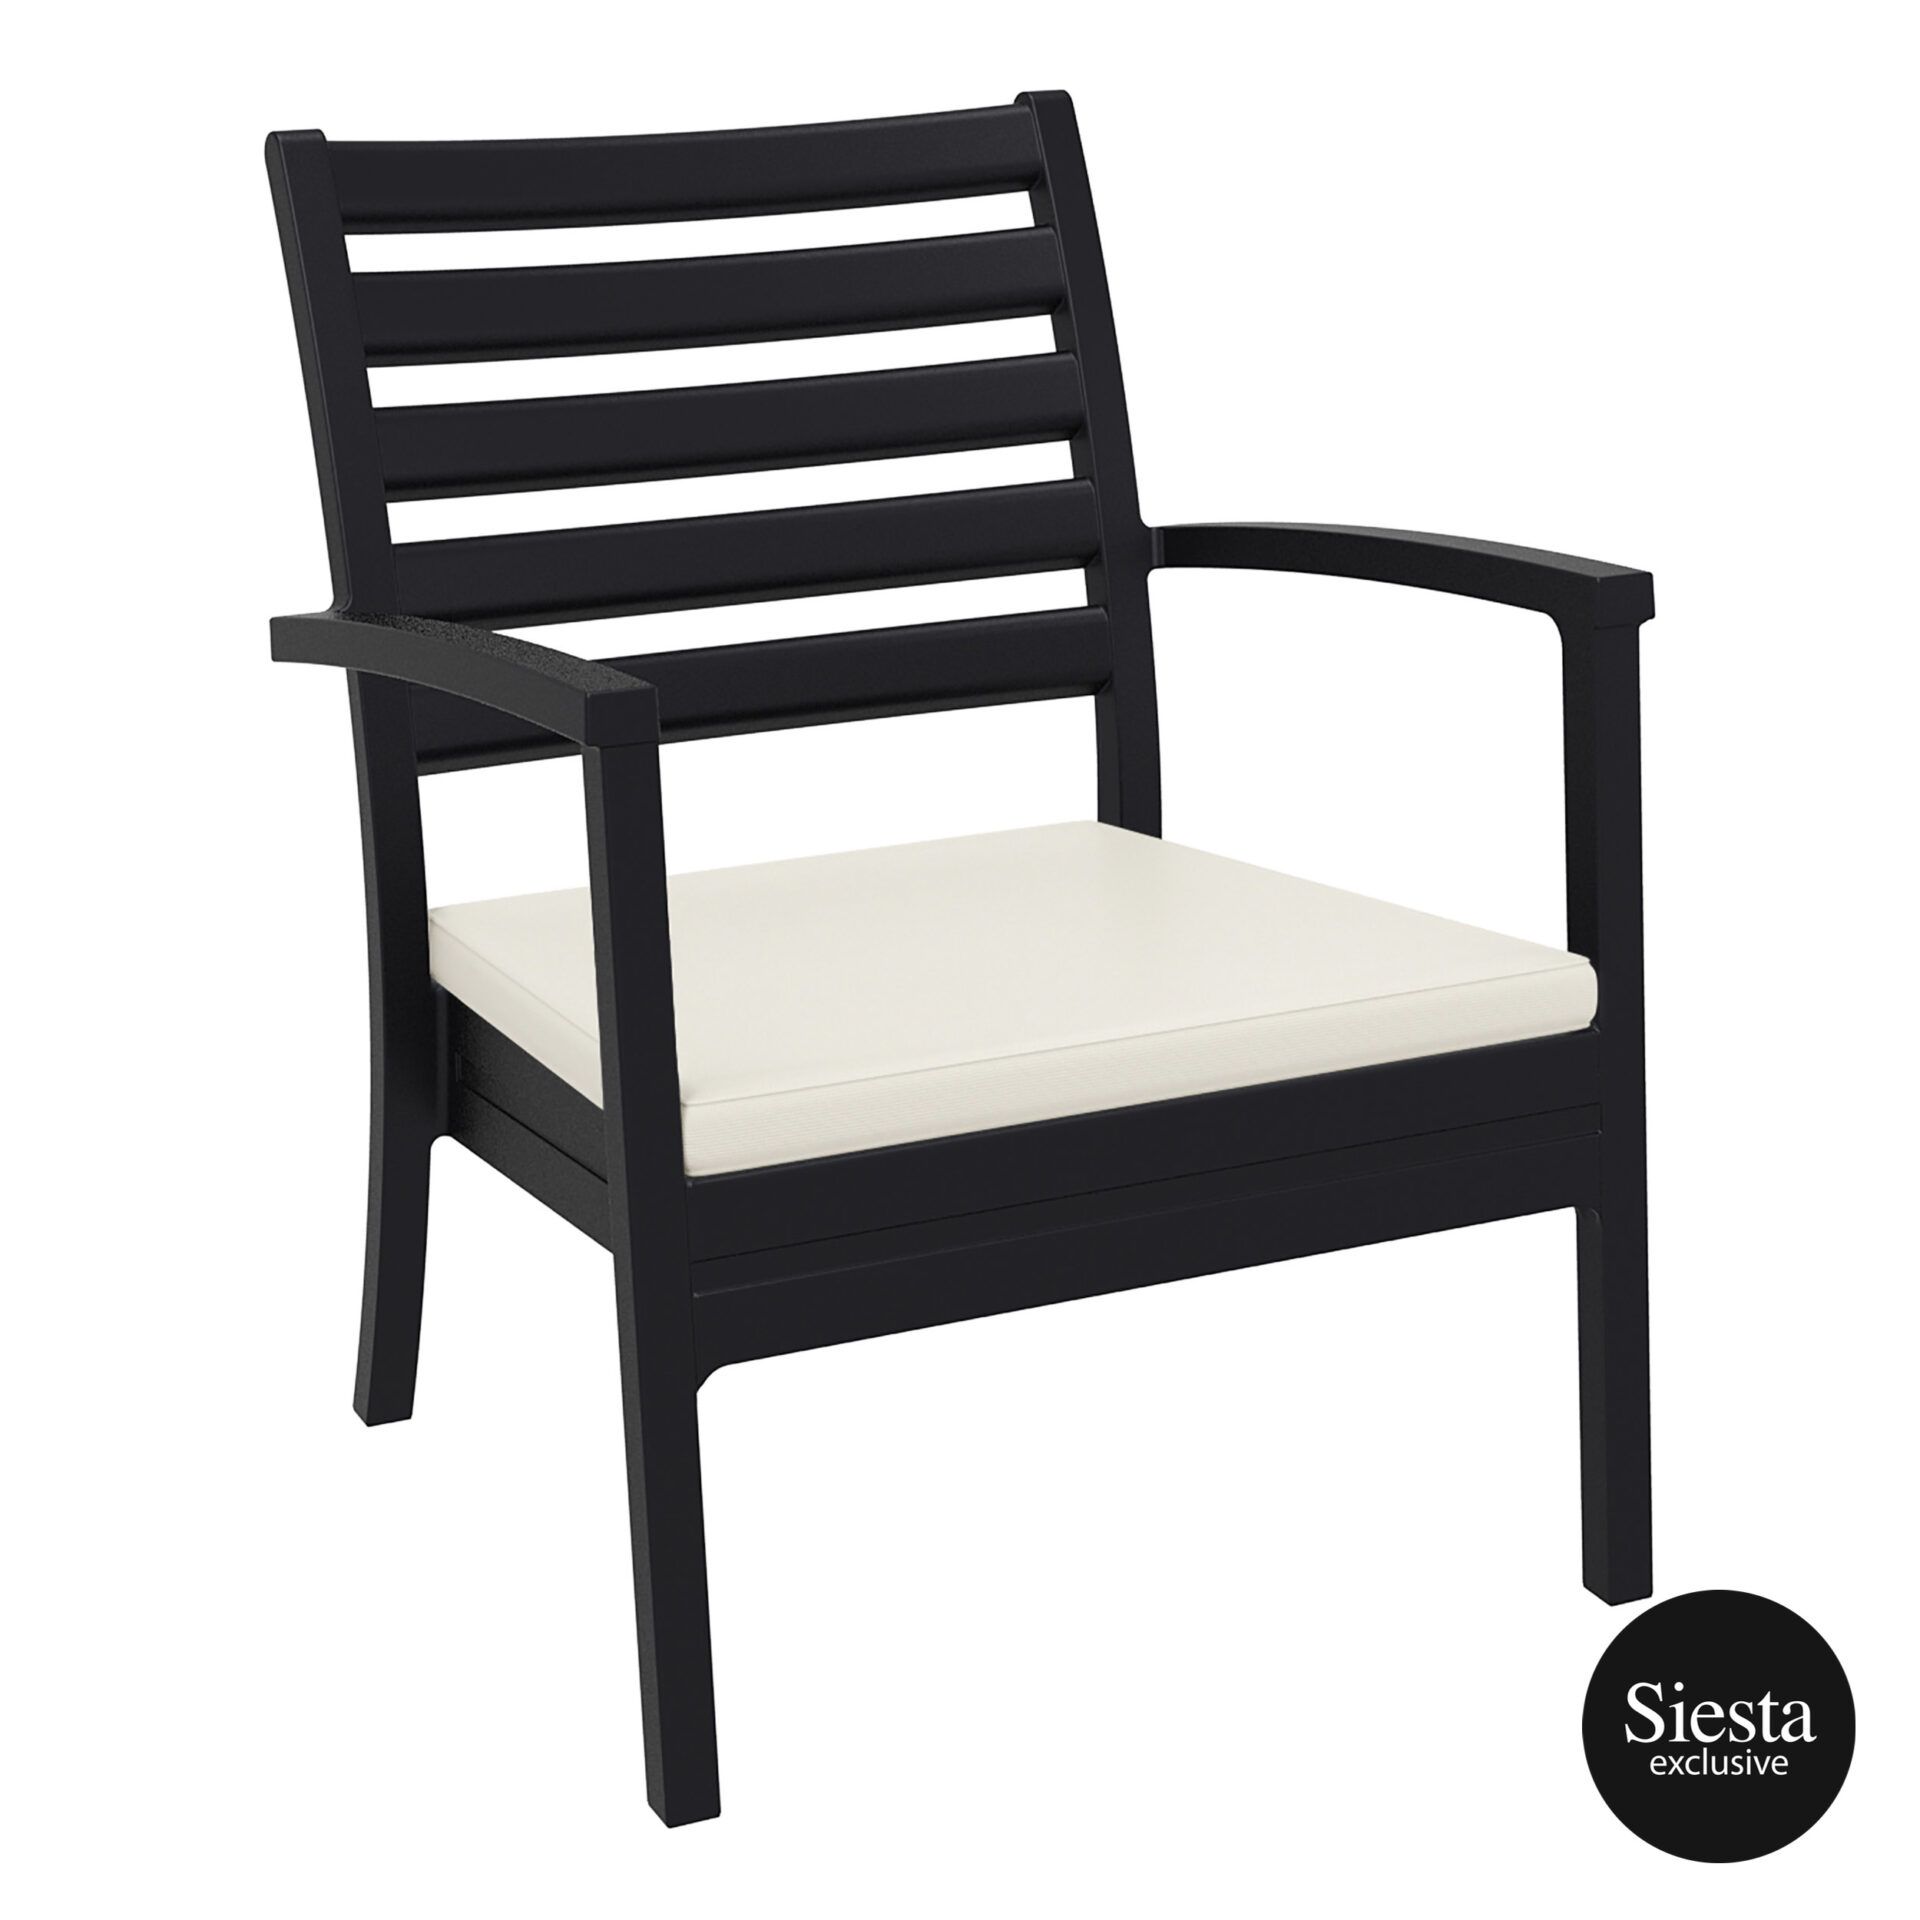 Artemis XL Armchair - Black with Beige Seat Cushion